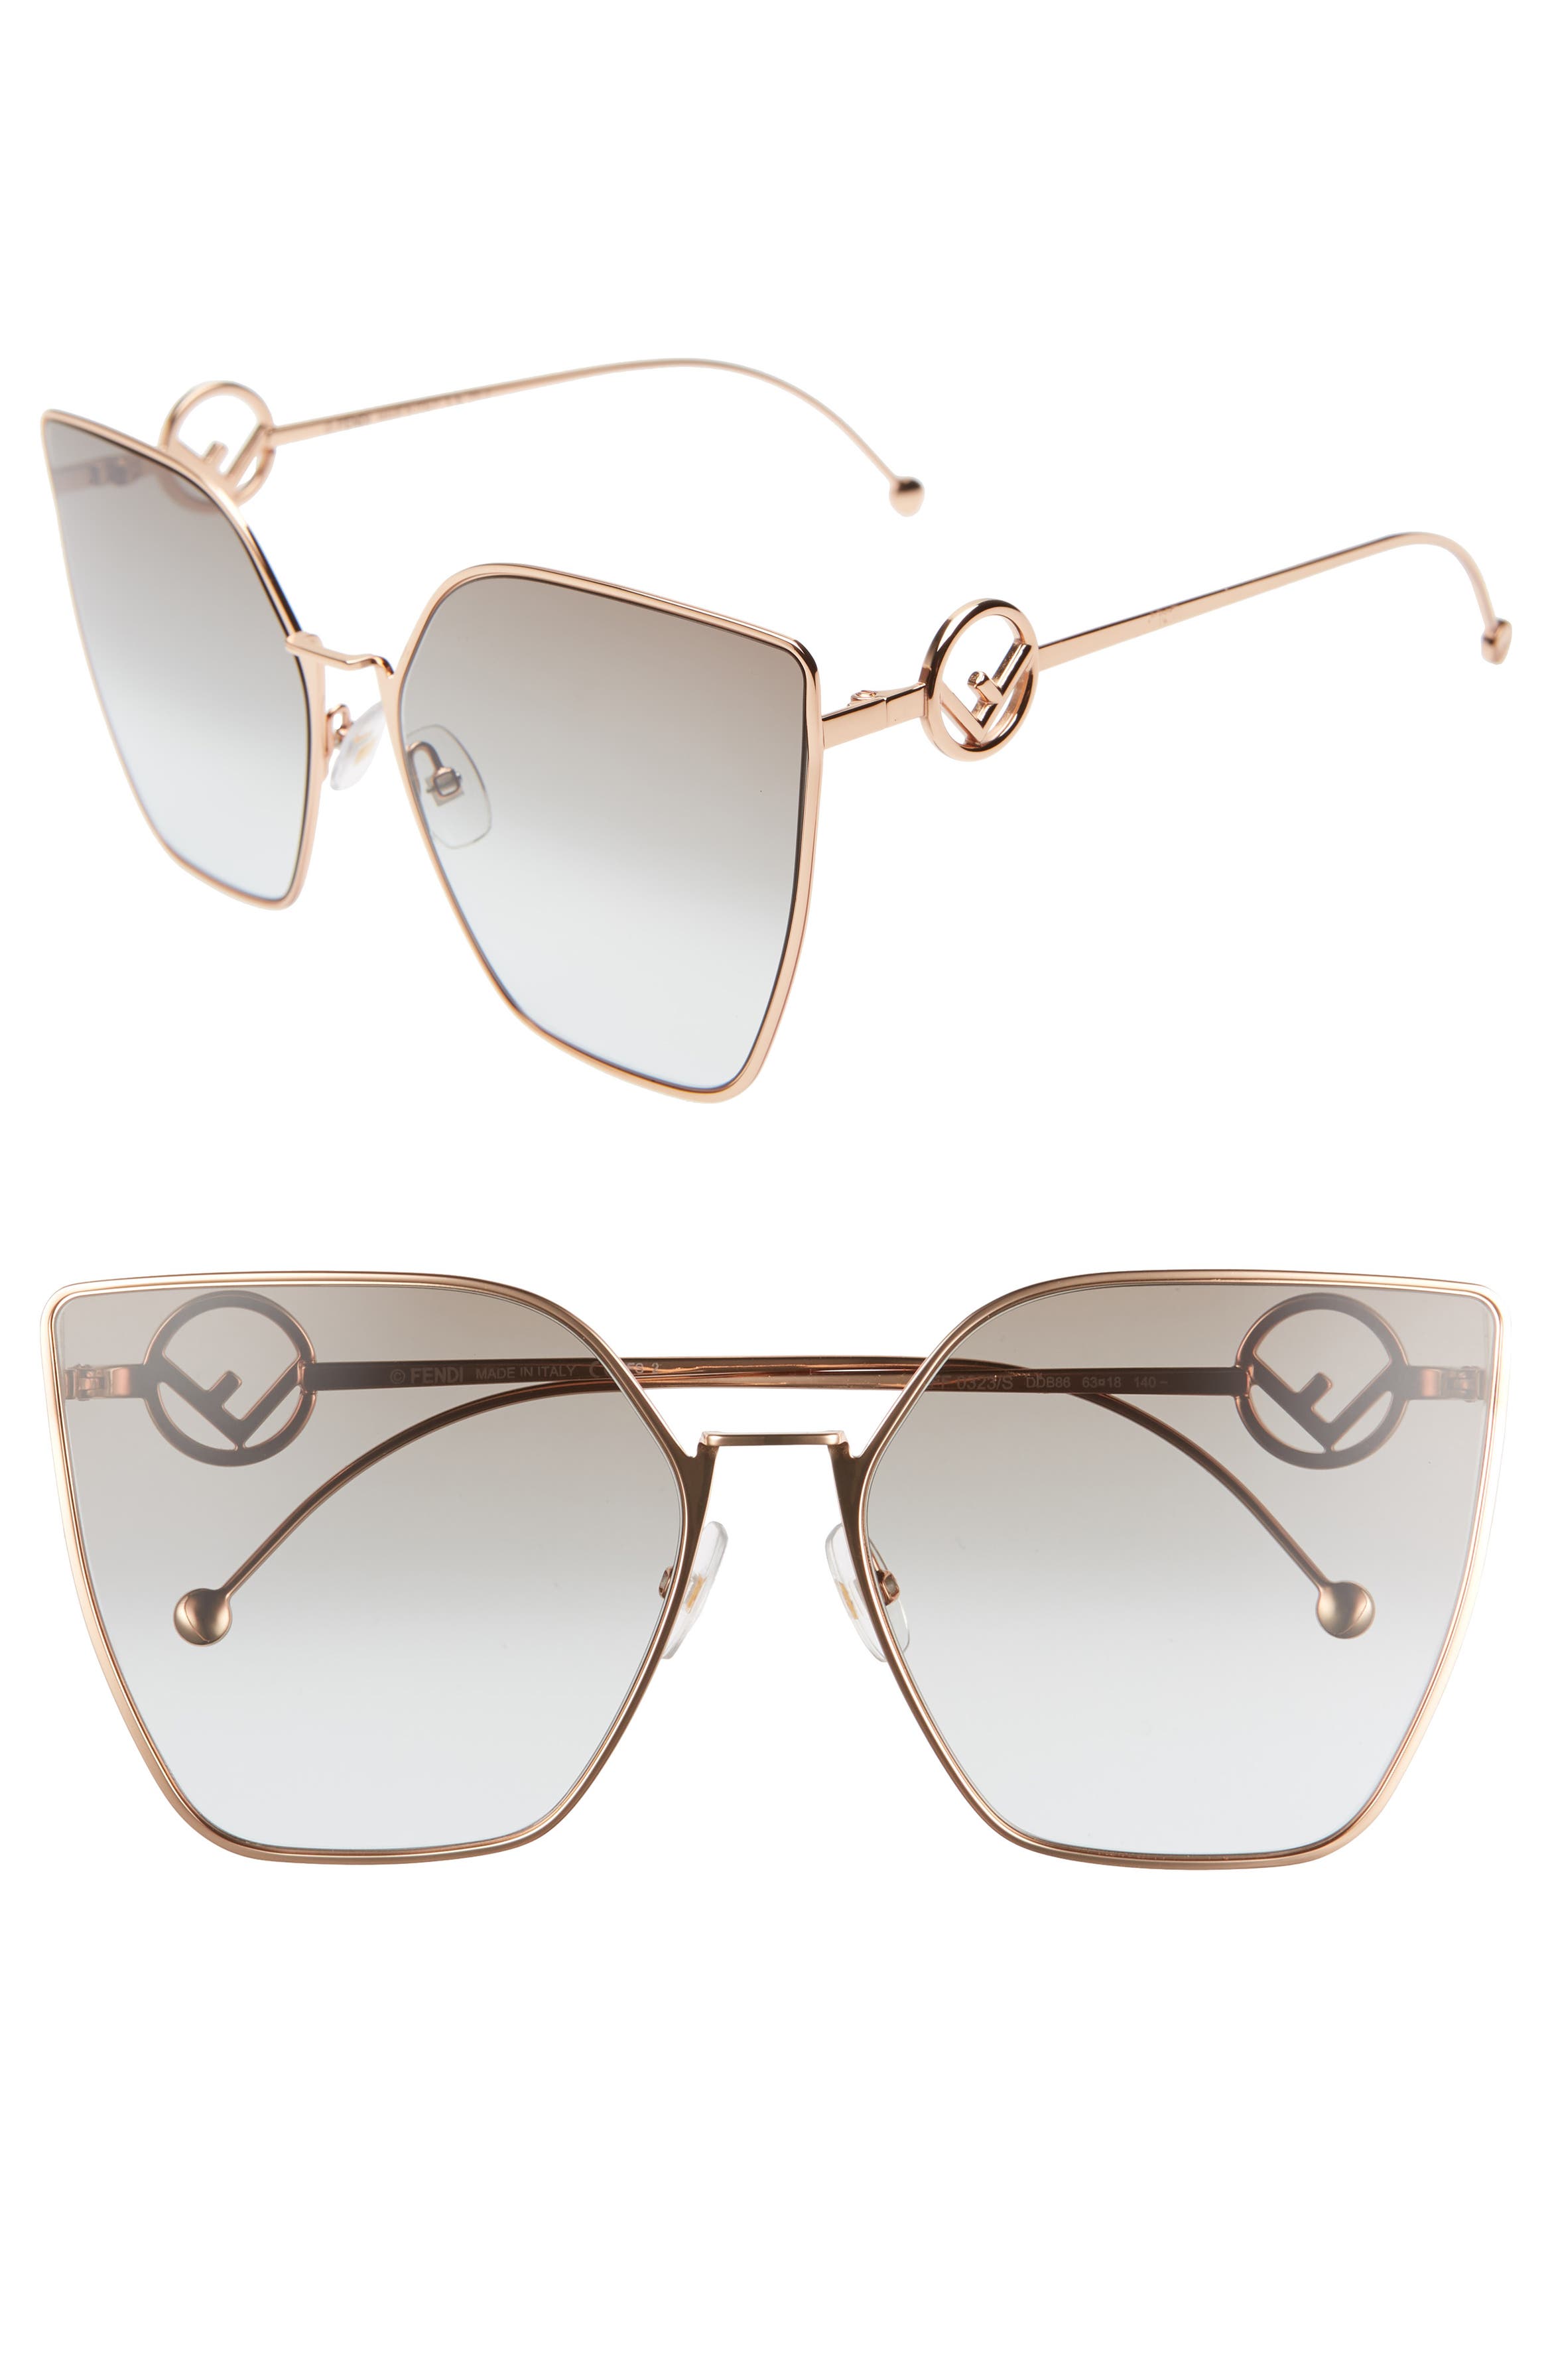 Fendi F is Fendi 63mm Oversized Sunglasses | Nordstrom